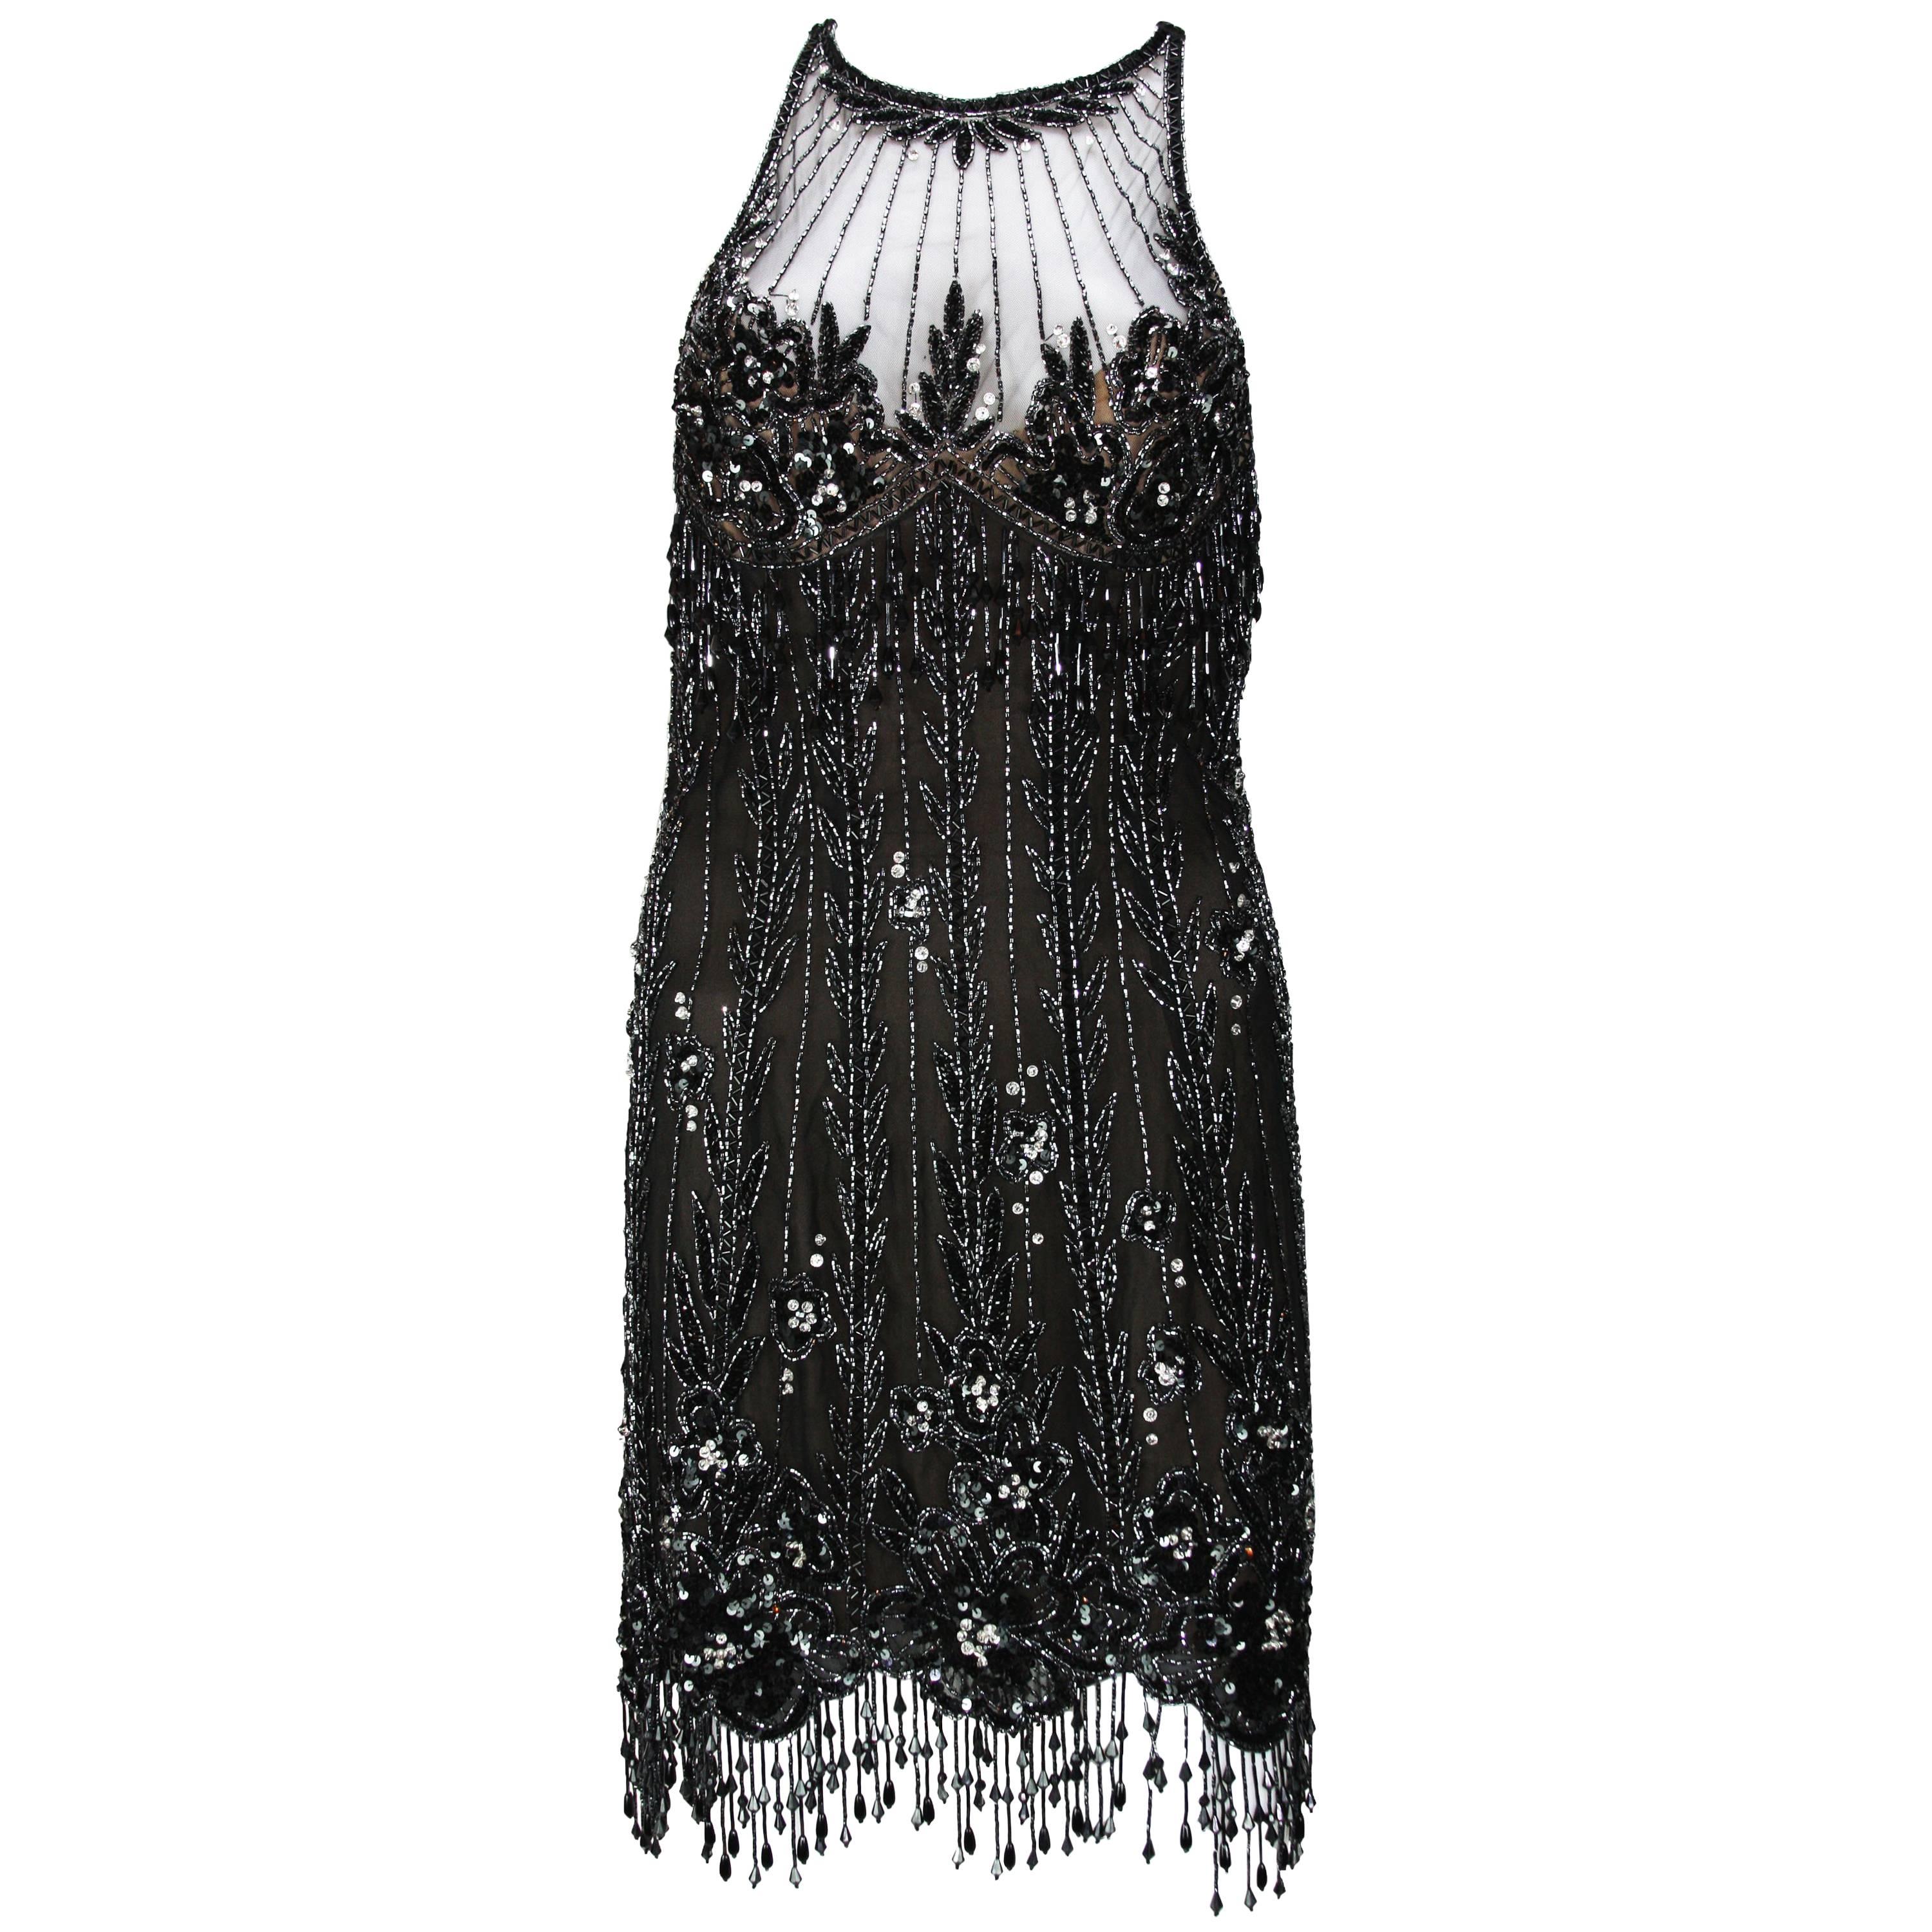 Vintage Bob Mackie 20s Inspired Beaded Gatsby Flapper Black Dress size 4 For Sale